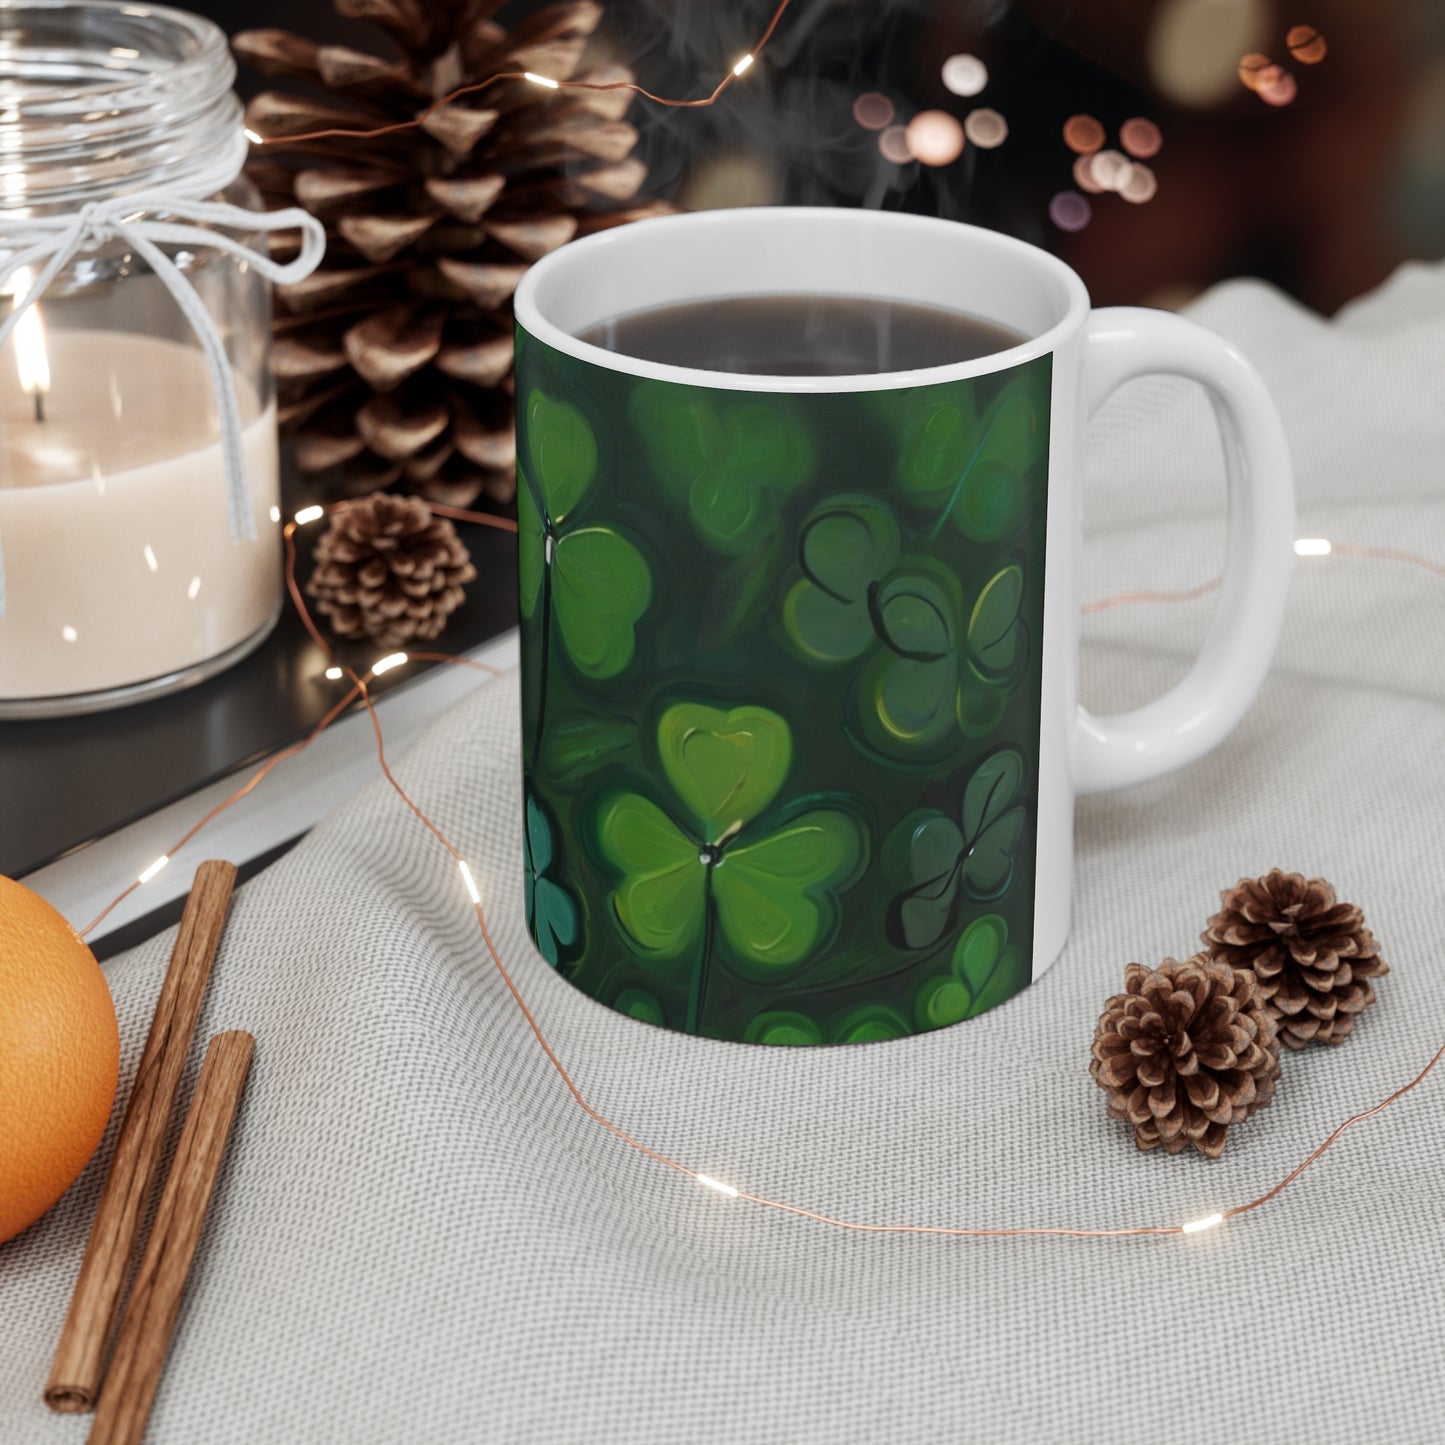 Green Clovers Paint Style Mug - Ceramic Coffee Mug 11oz